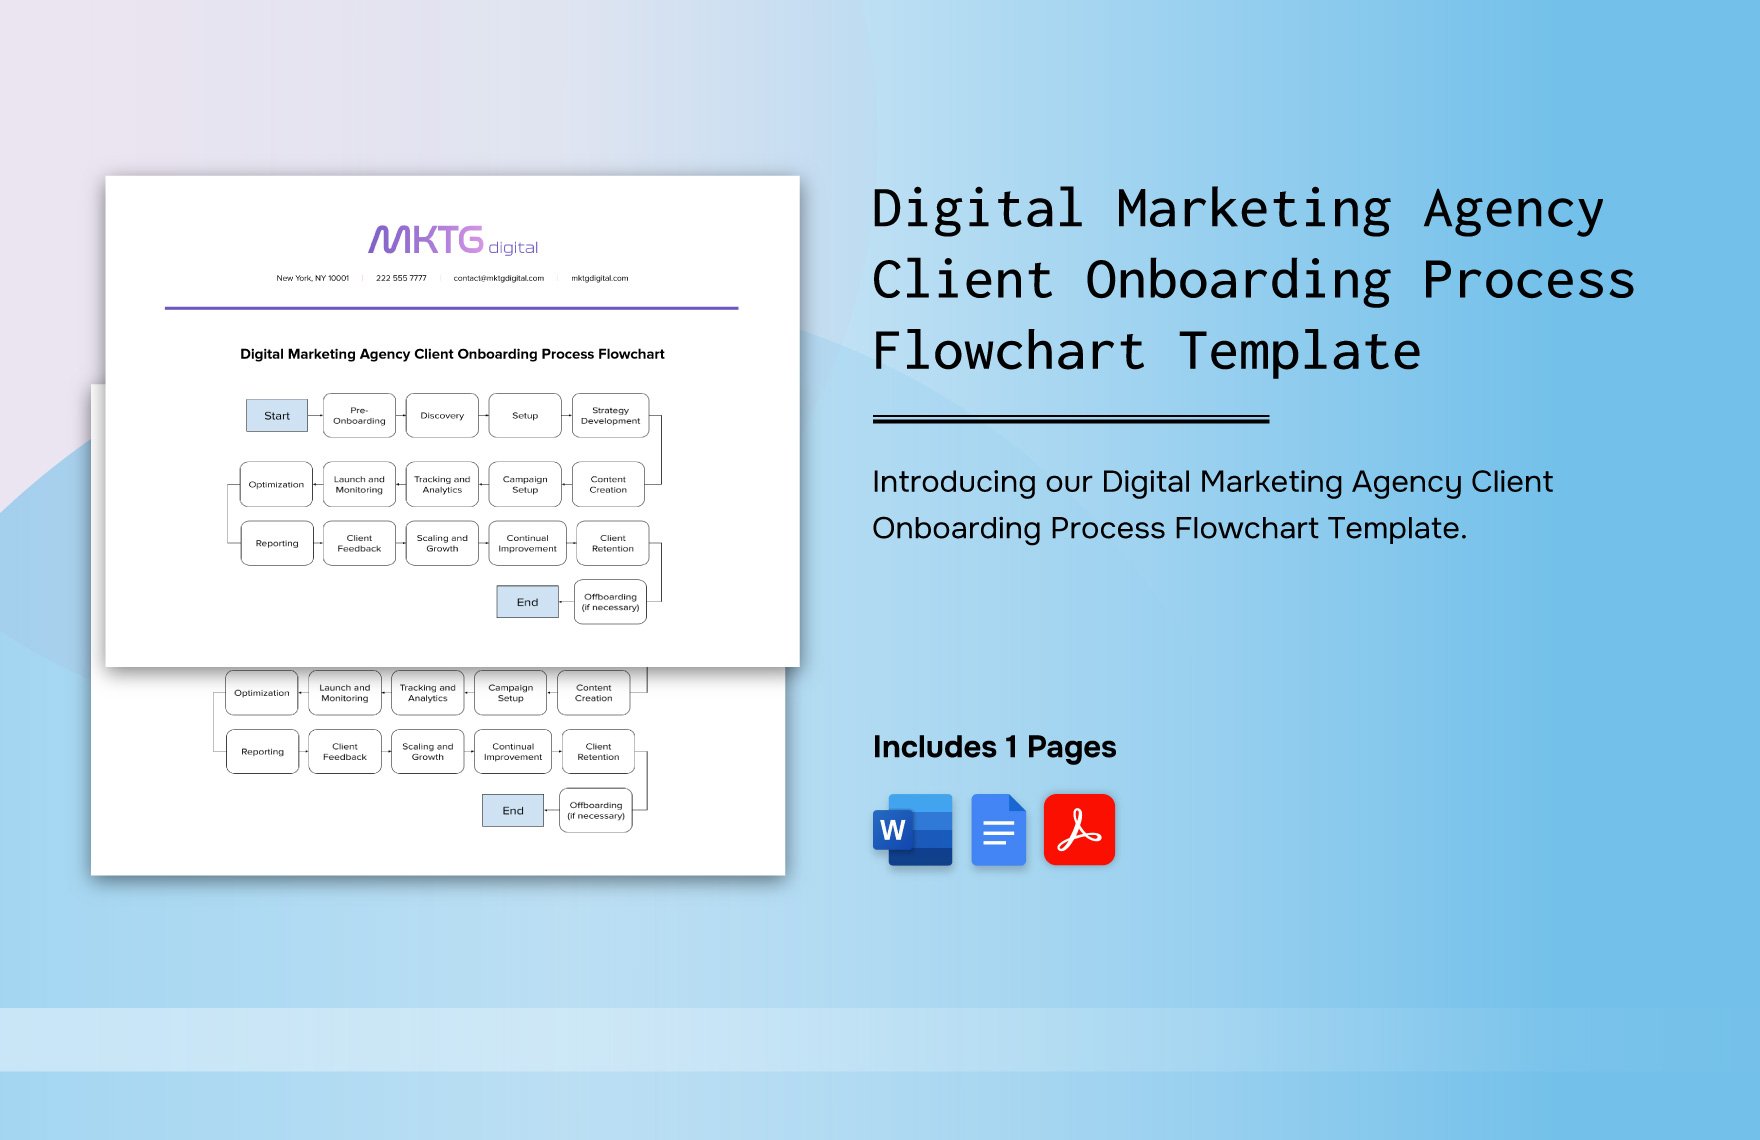 Digital Marketing Agency Client Onboarding Process Flowchart Template